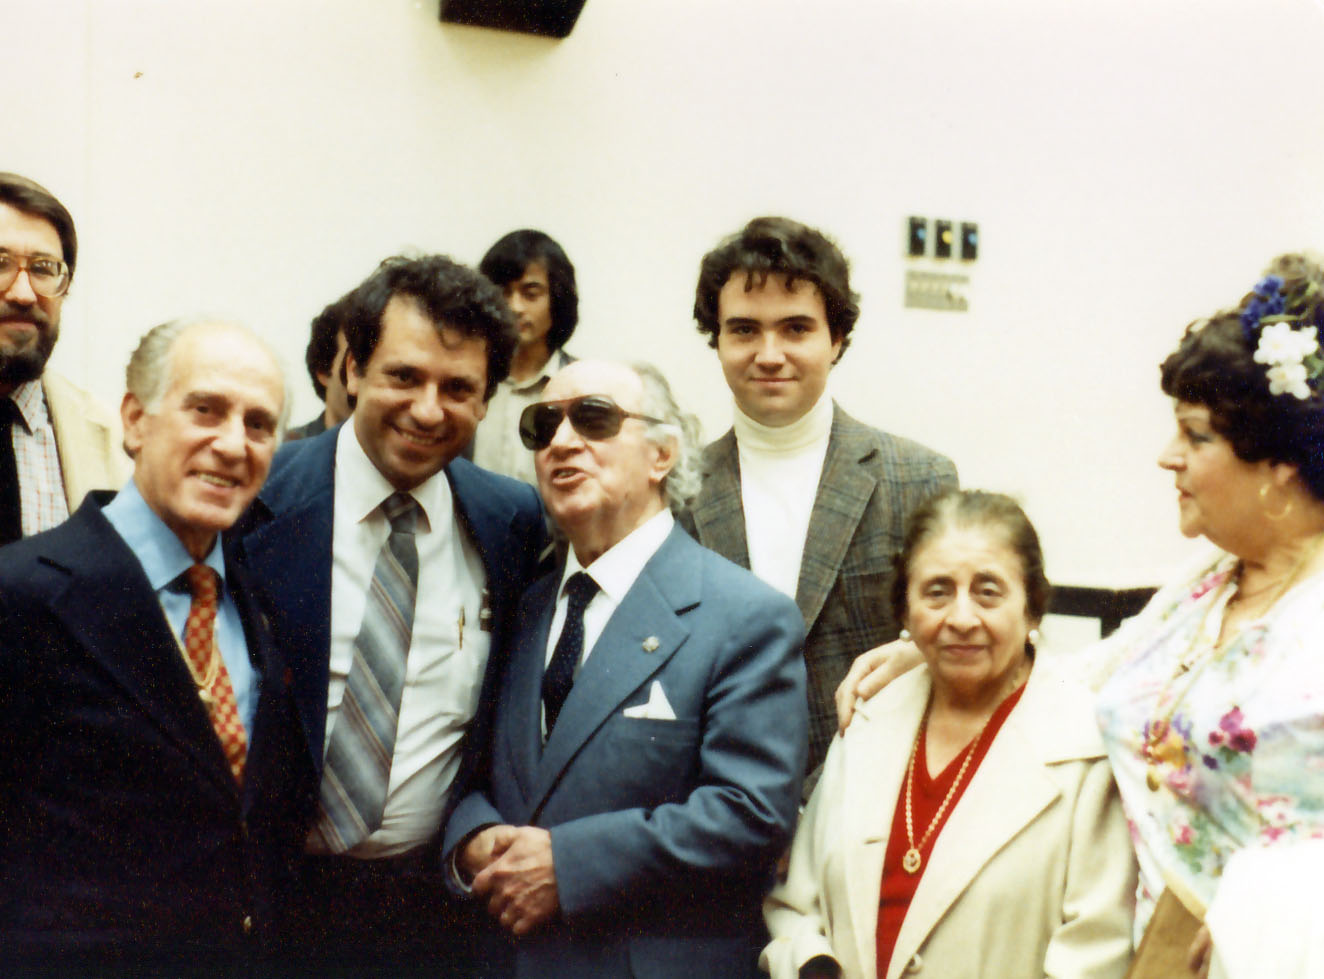 Celedonio, Pepe, Joaquín Rodrigo, his wife, Victoria Kamhi and Angelita Romero